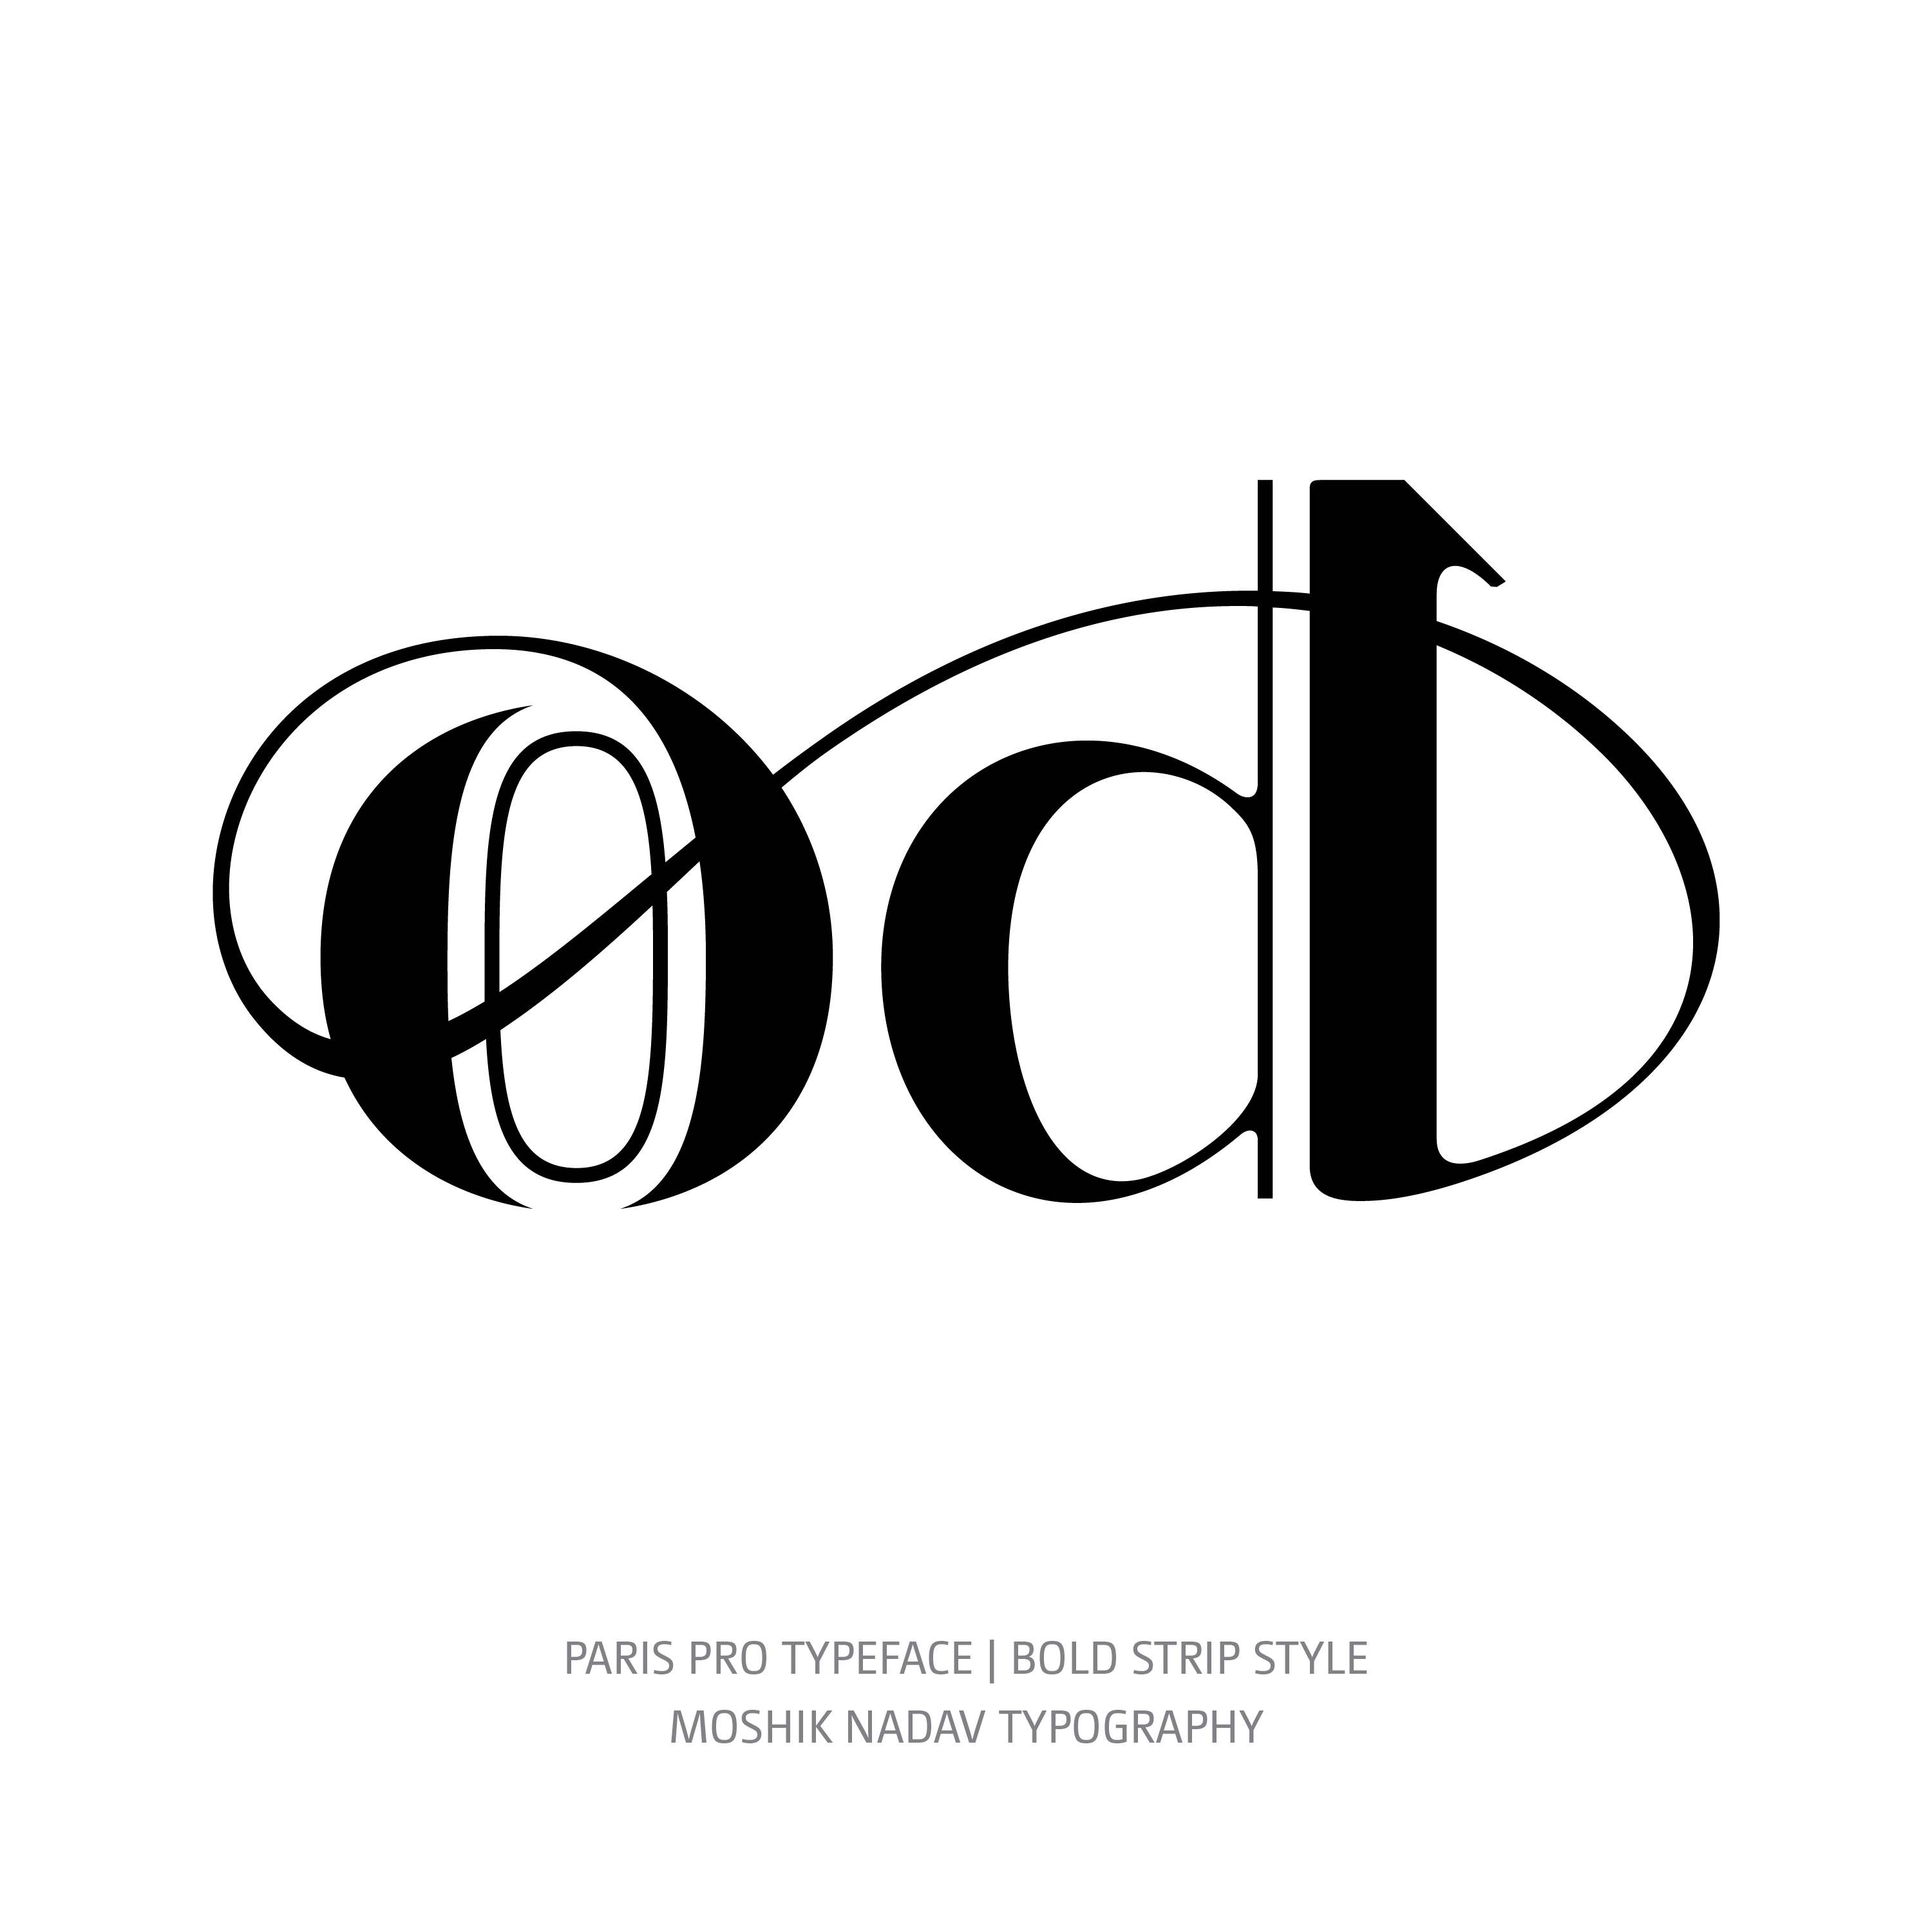 Paris Pro Typeface Bold Strip od ligature